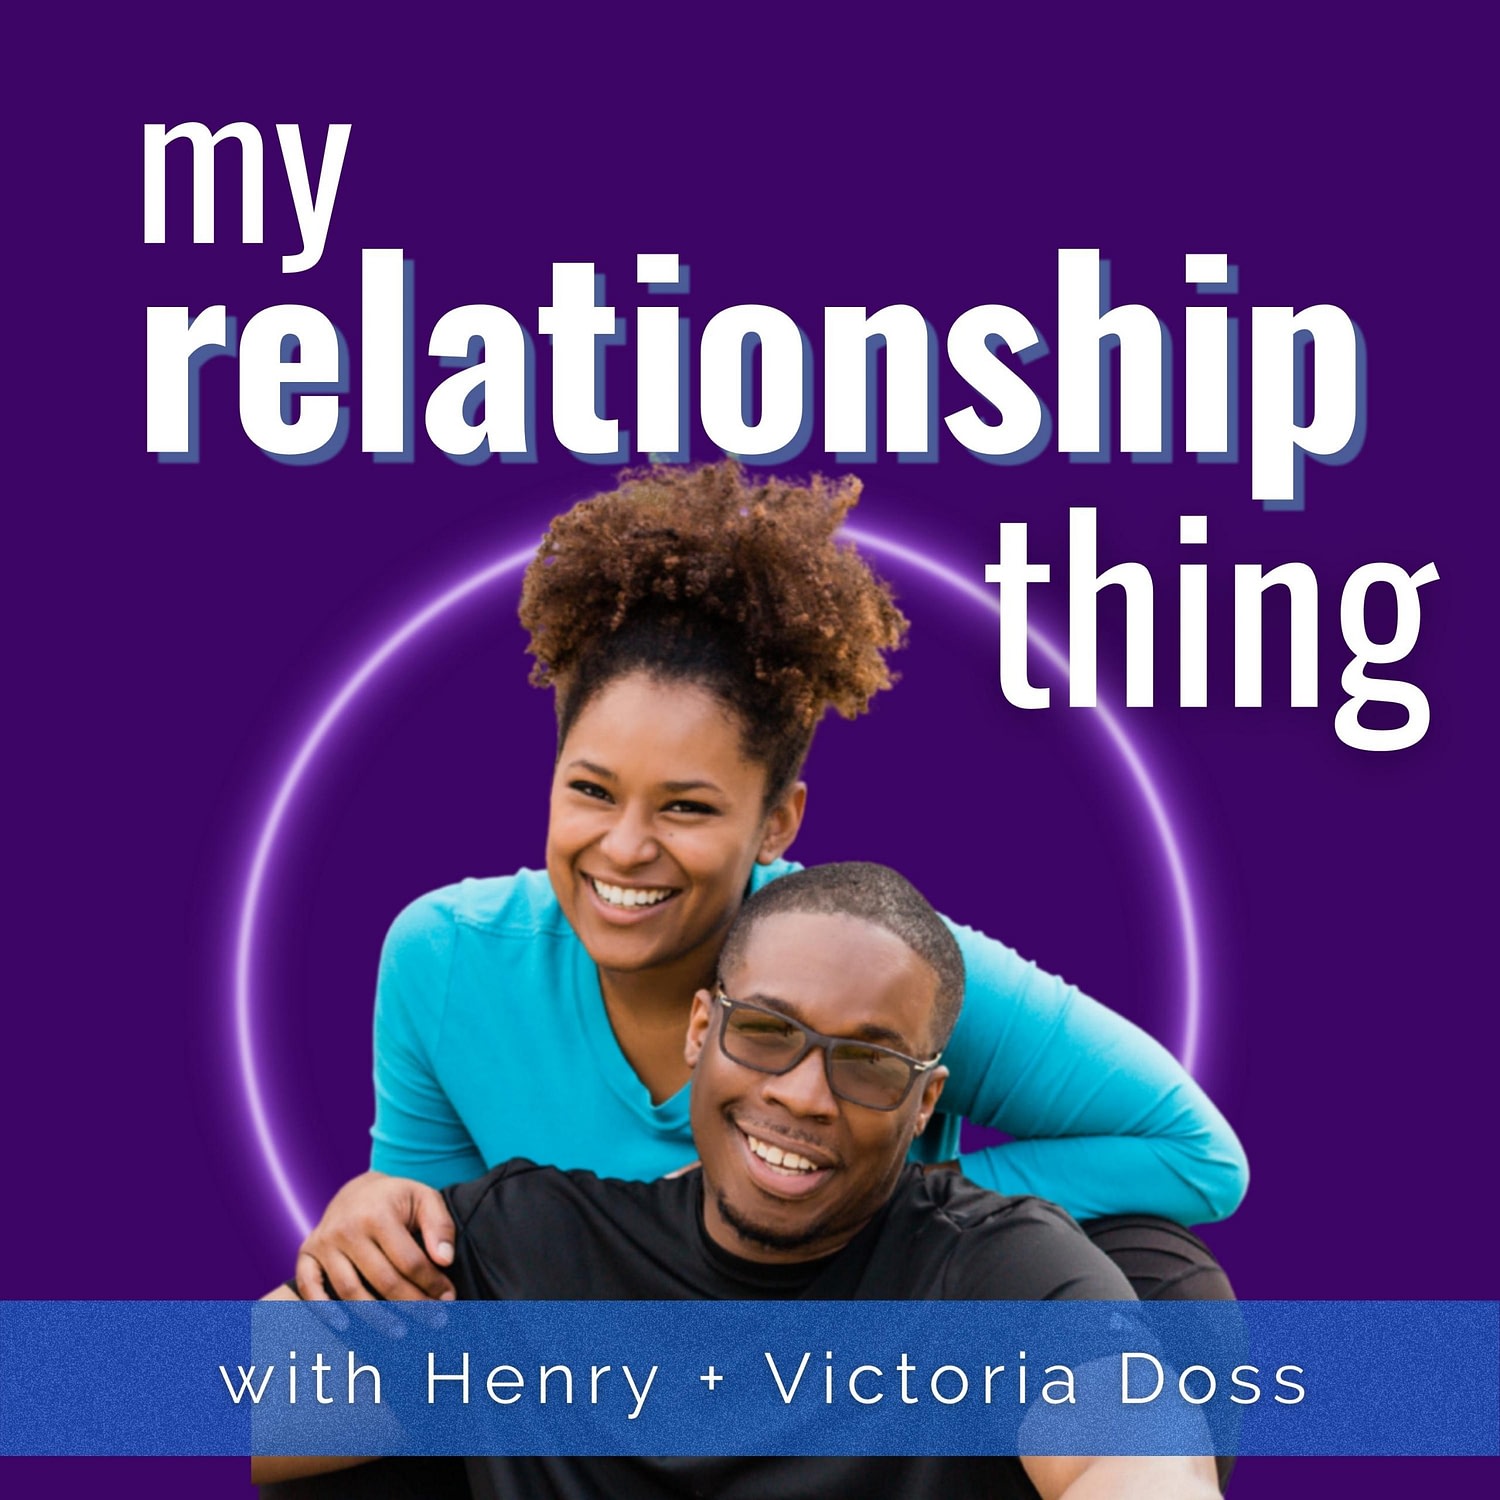 myrelationshipthing podcast henry doss victoria doss